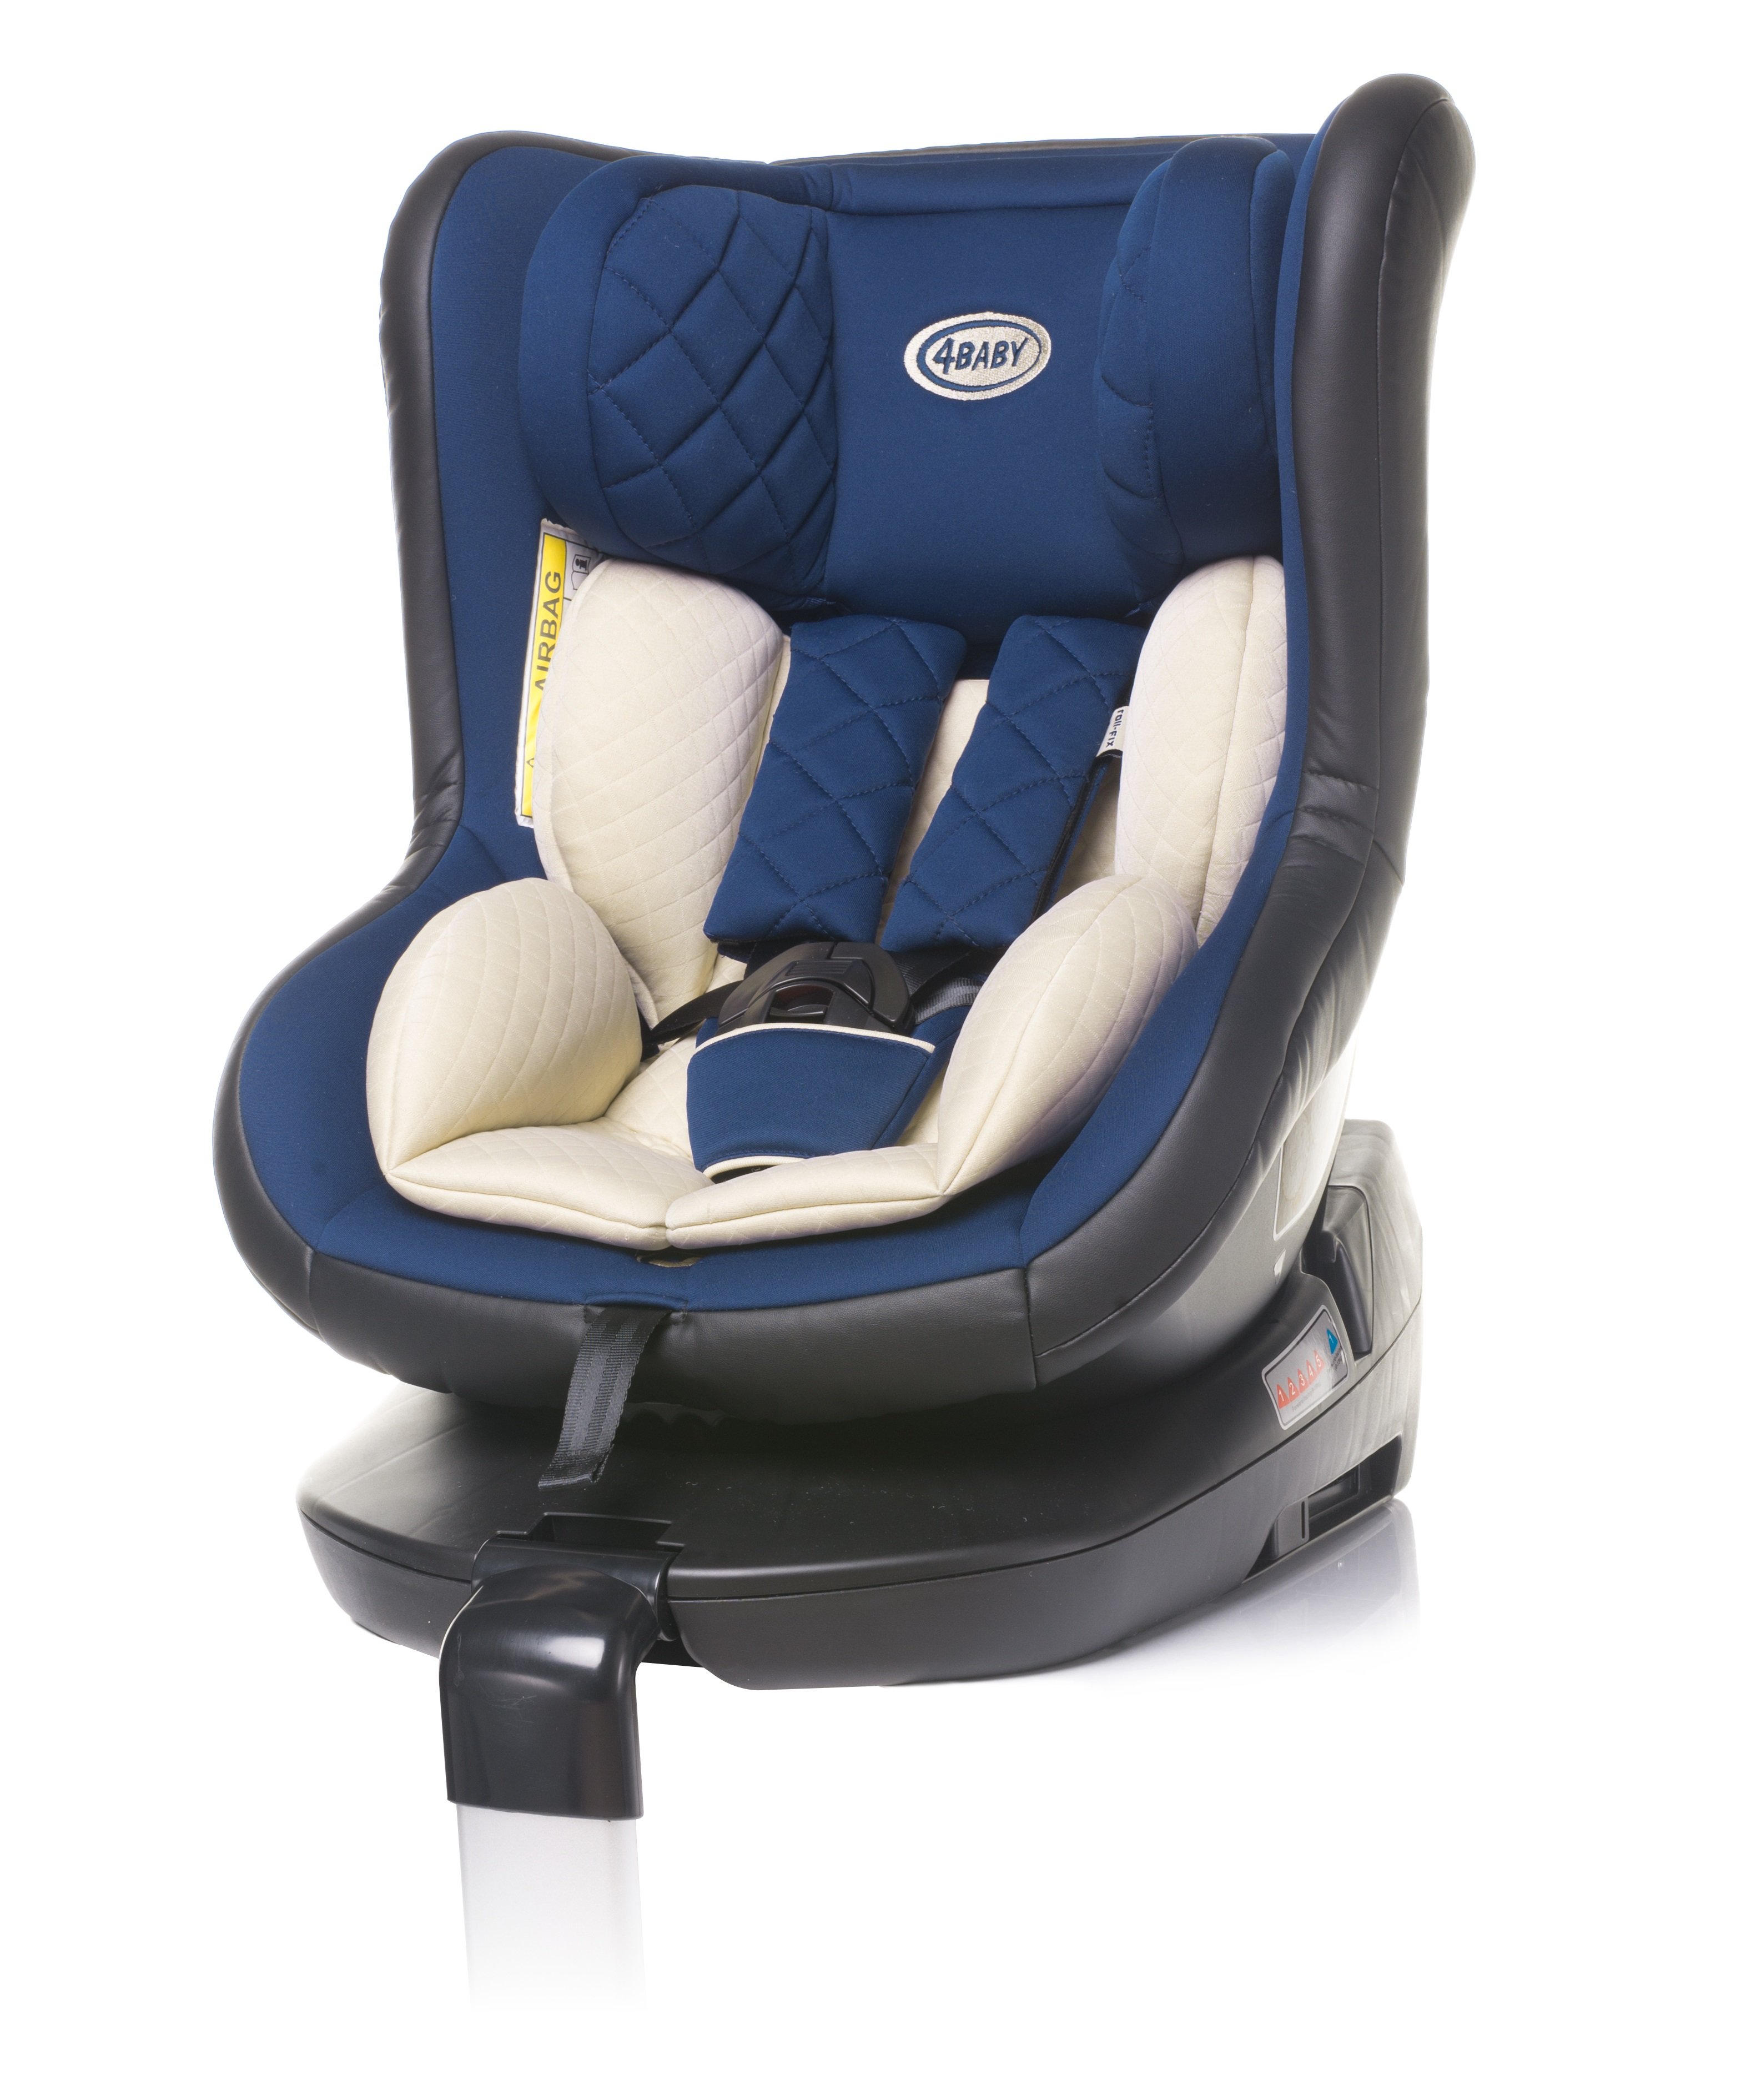 Bērnu autosēdeklis 0-18 kg 4BABY ROLL-FIX ISOFIX navy blue